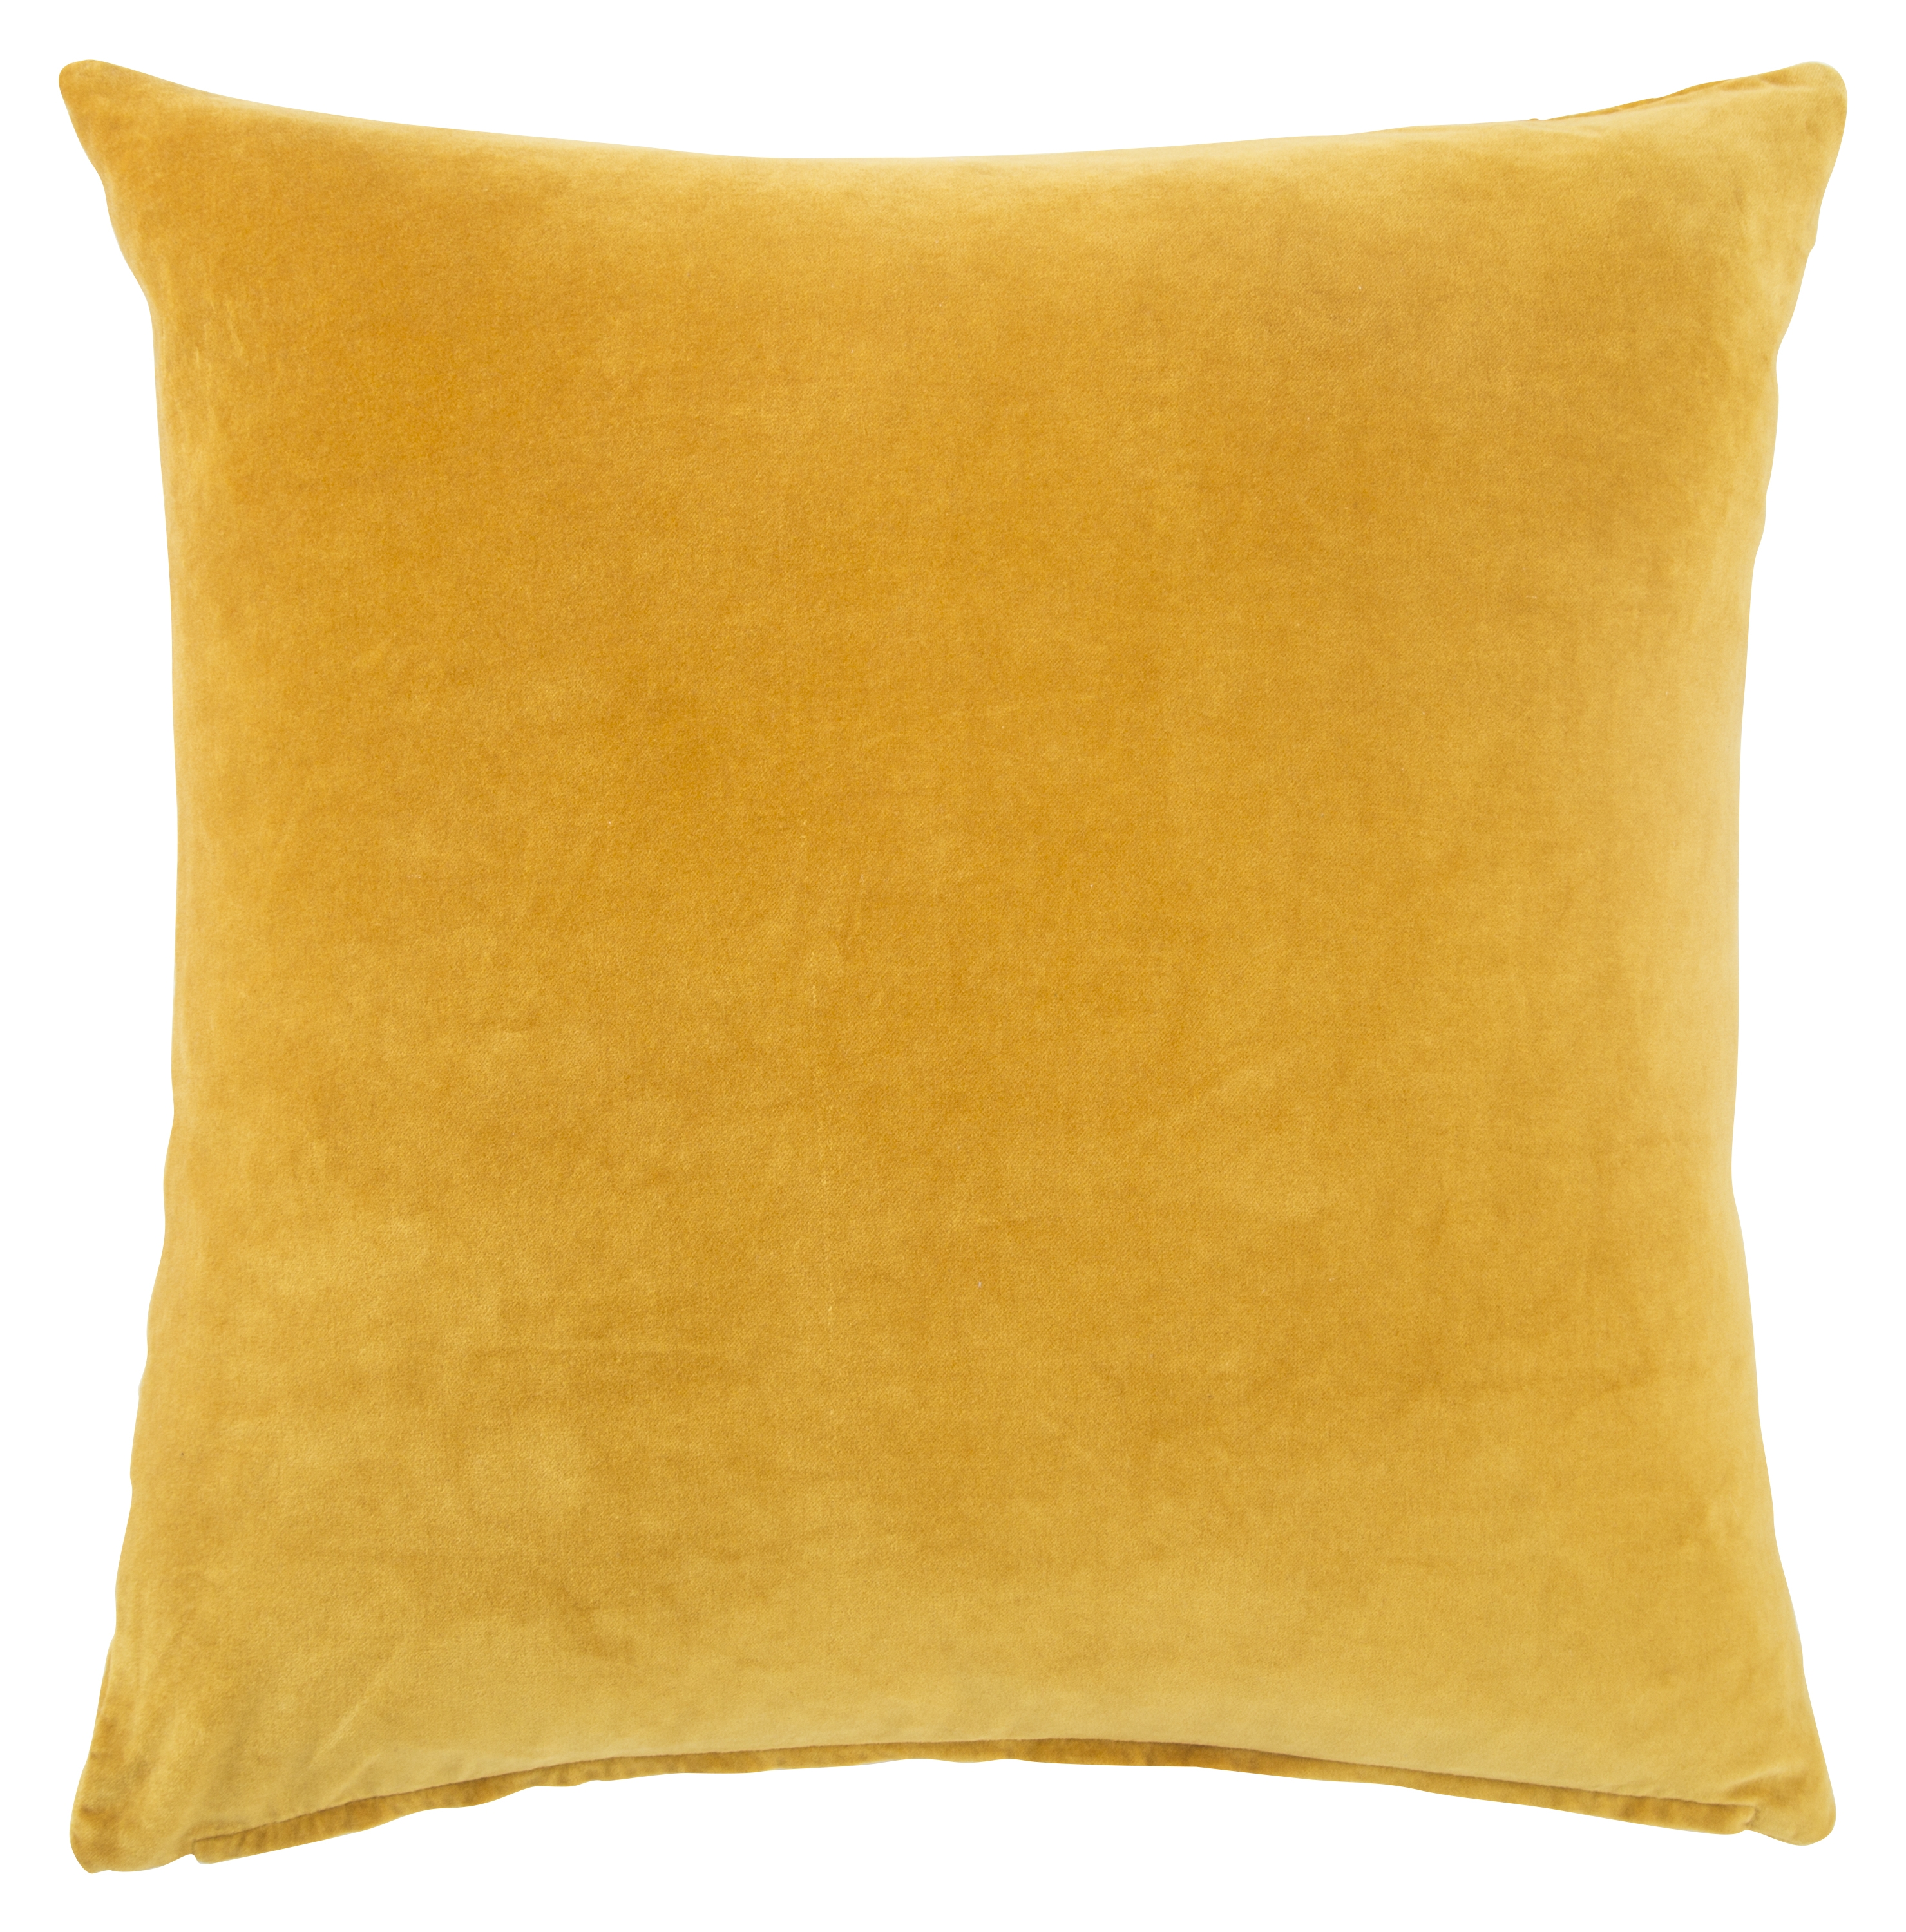 Design (US) Yellow 22"X22" Pillow - Image 1